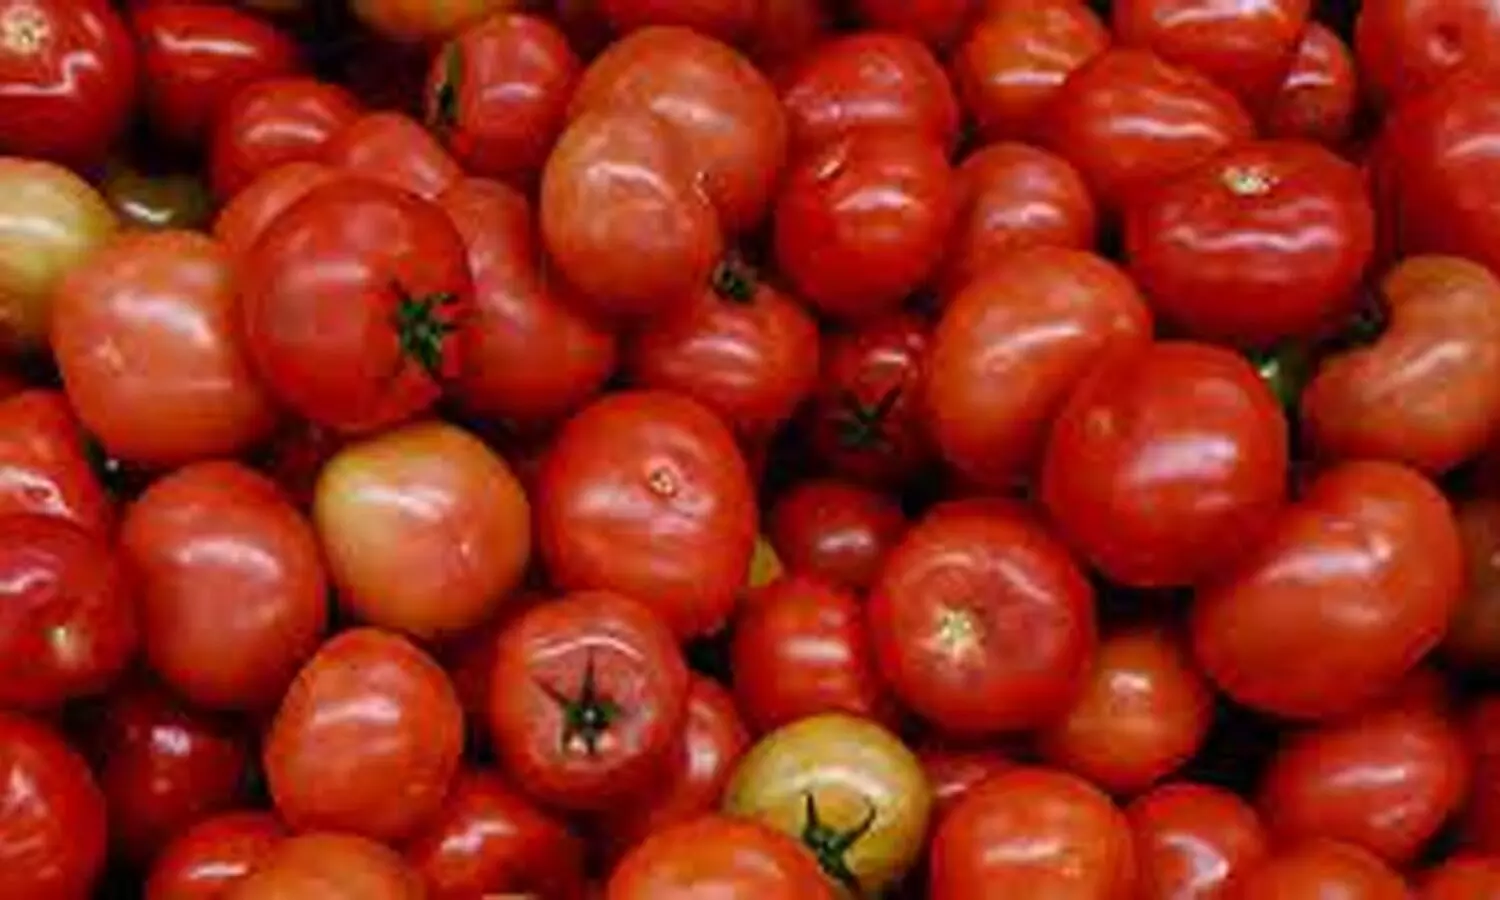 Traders sell tomatoes, amid police security in Karnataka’s Kolar